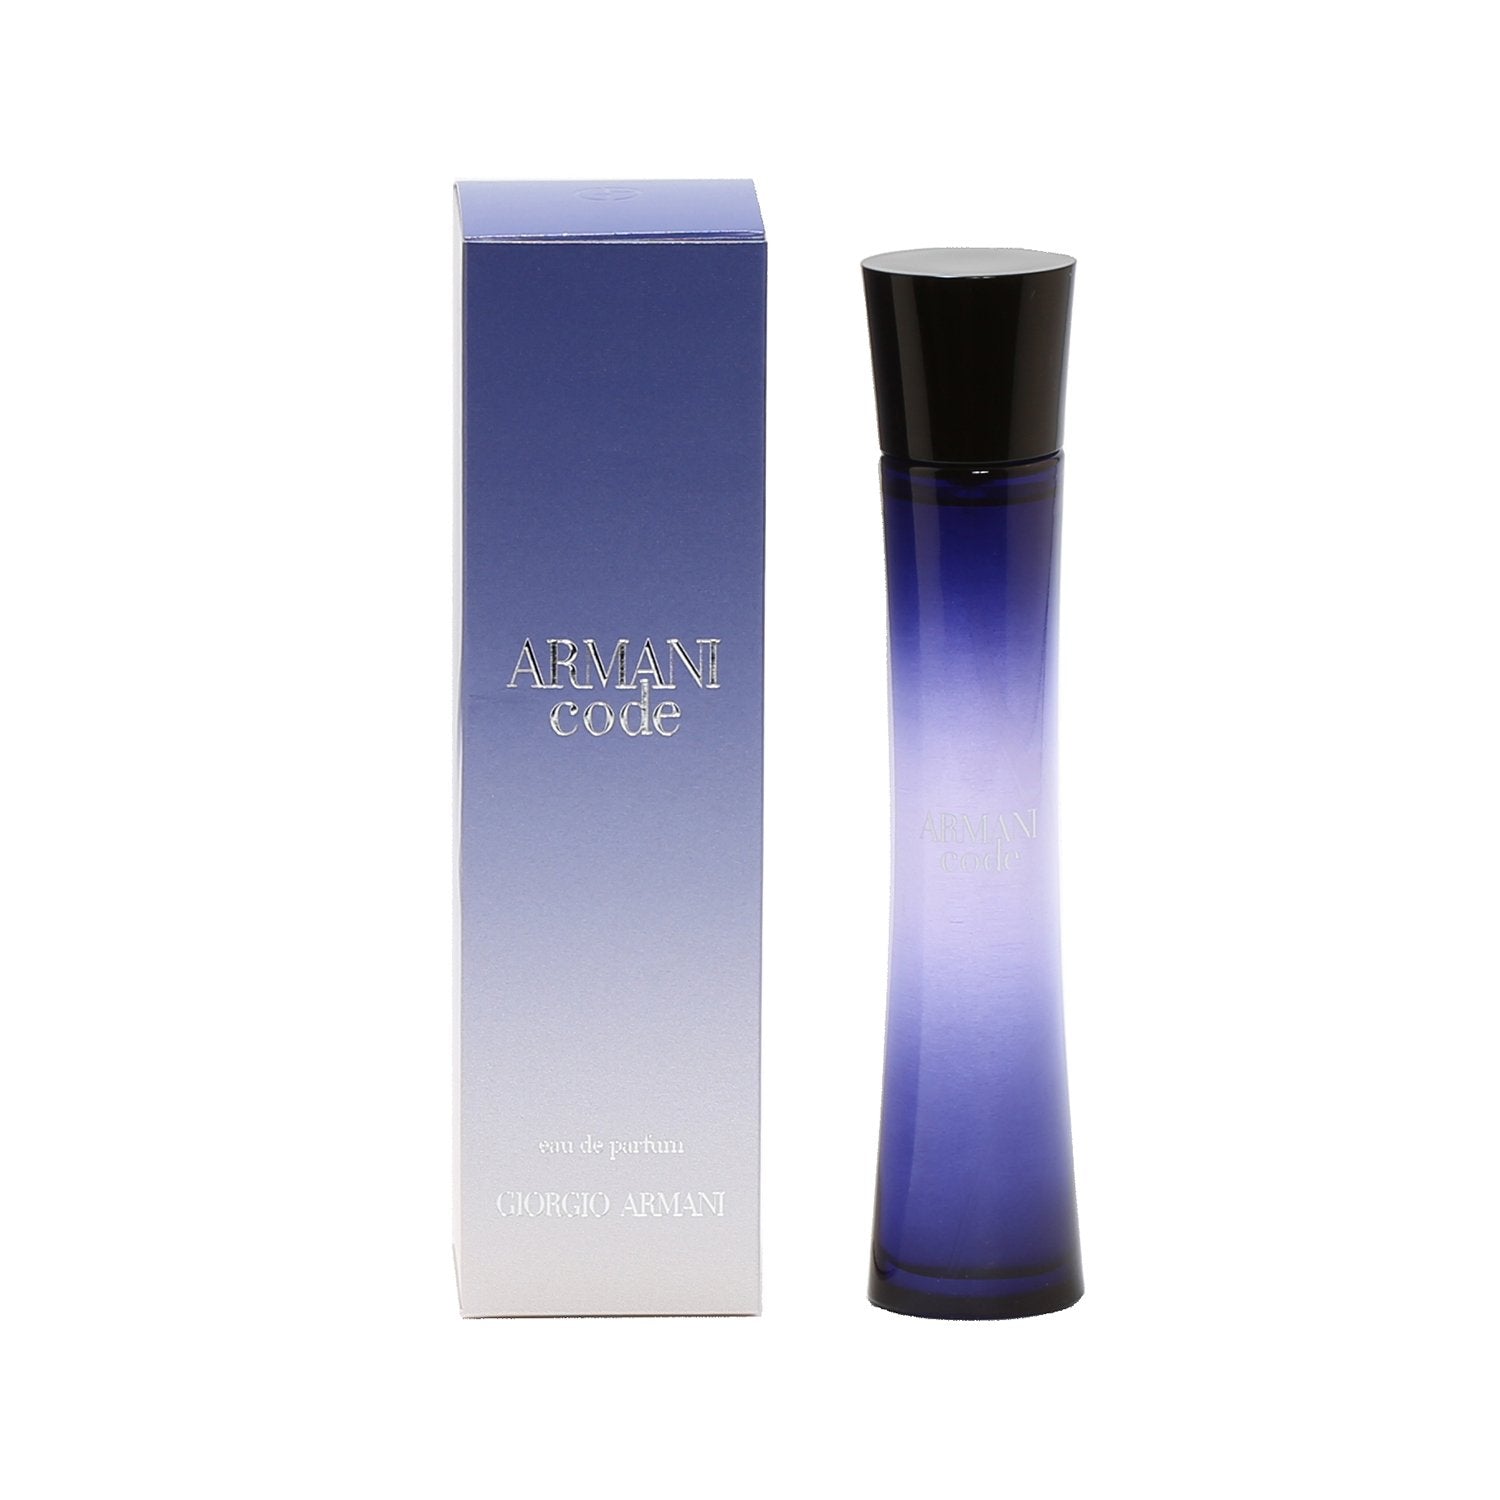 ARMANI CODE FOR WOMEN BY GIORGIO ARMANI - EAU DE PARFUM SPRAY – Fragrance